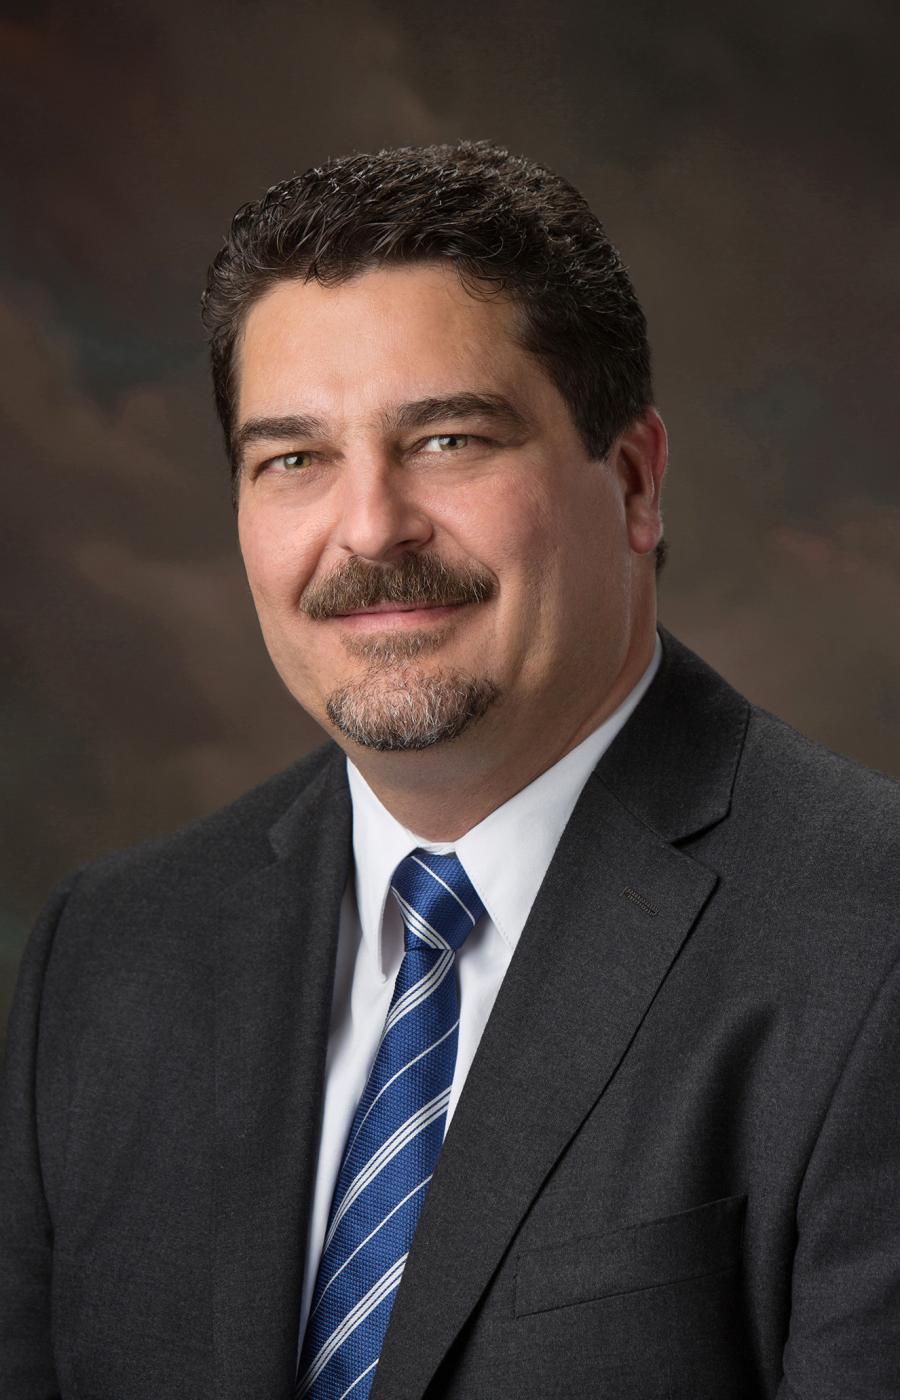 Richard Shultz has been named vice president of engineering at Link-Belt Cranes, effective Jan. 1, 2018.